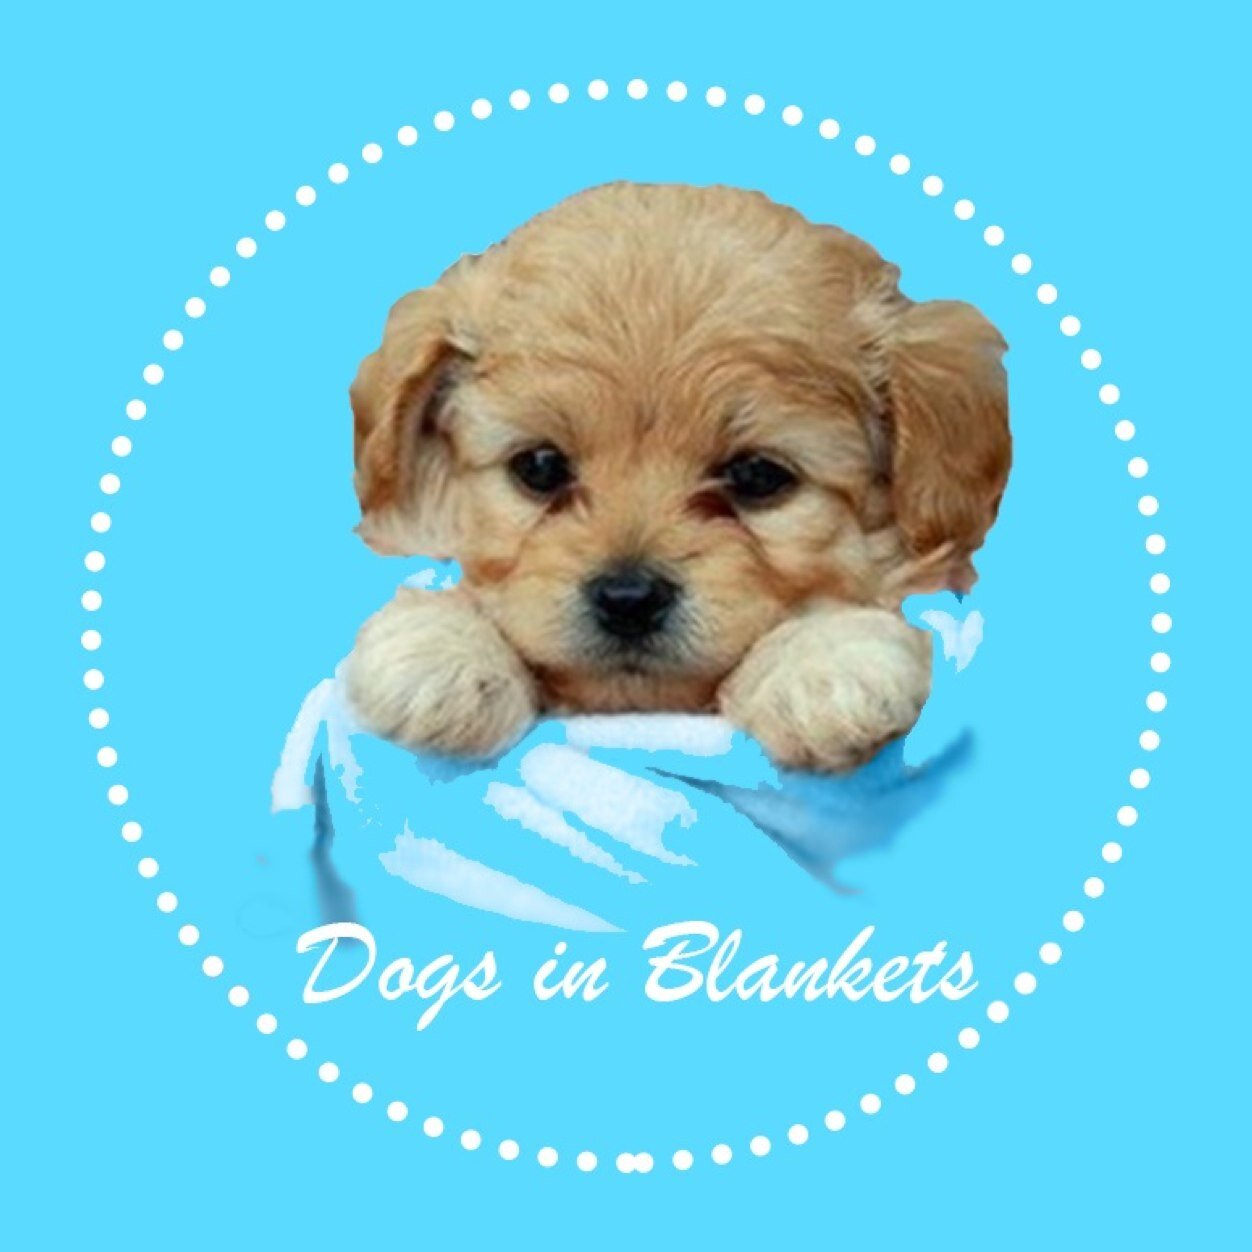 Dogs In Blankets DogsinBlankets Twitter